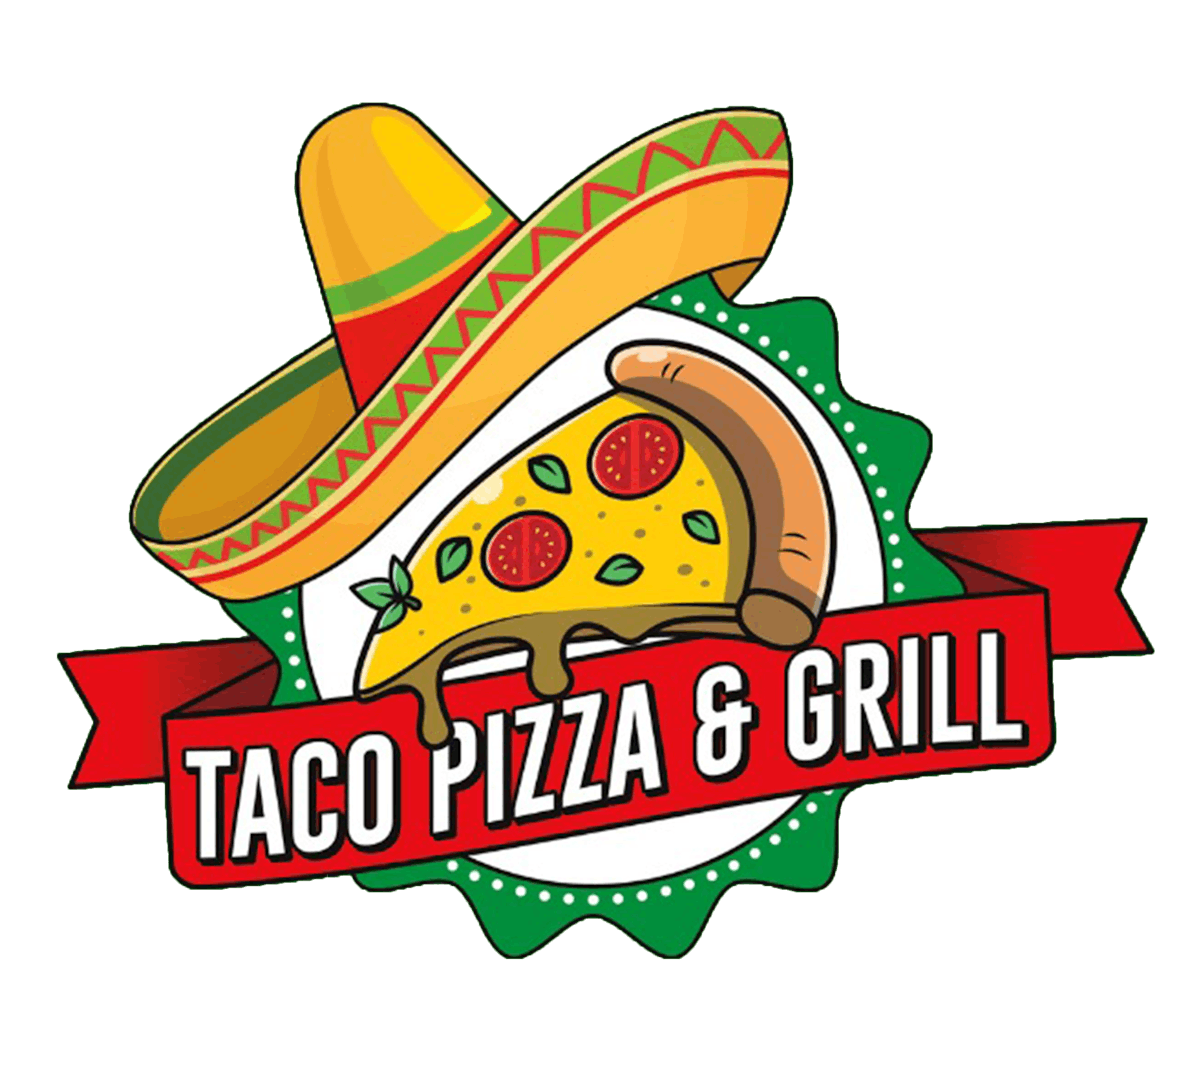 Home - Taco Pizza & Grill